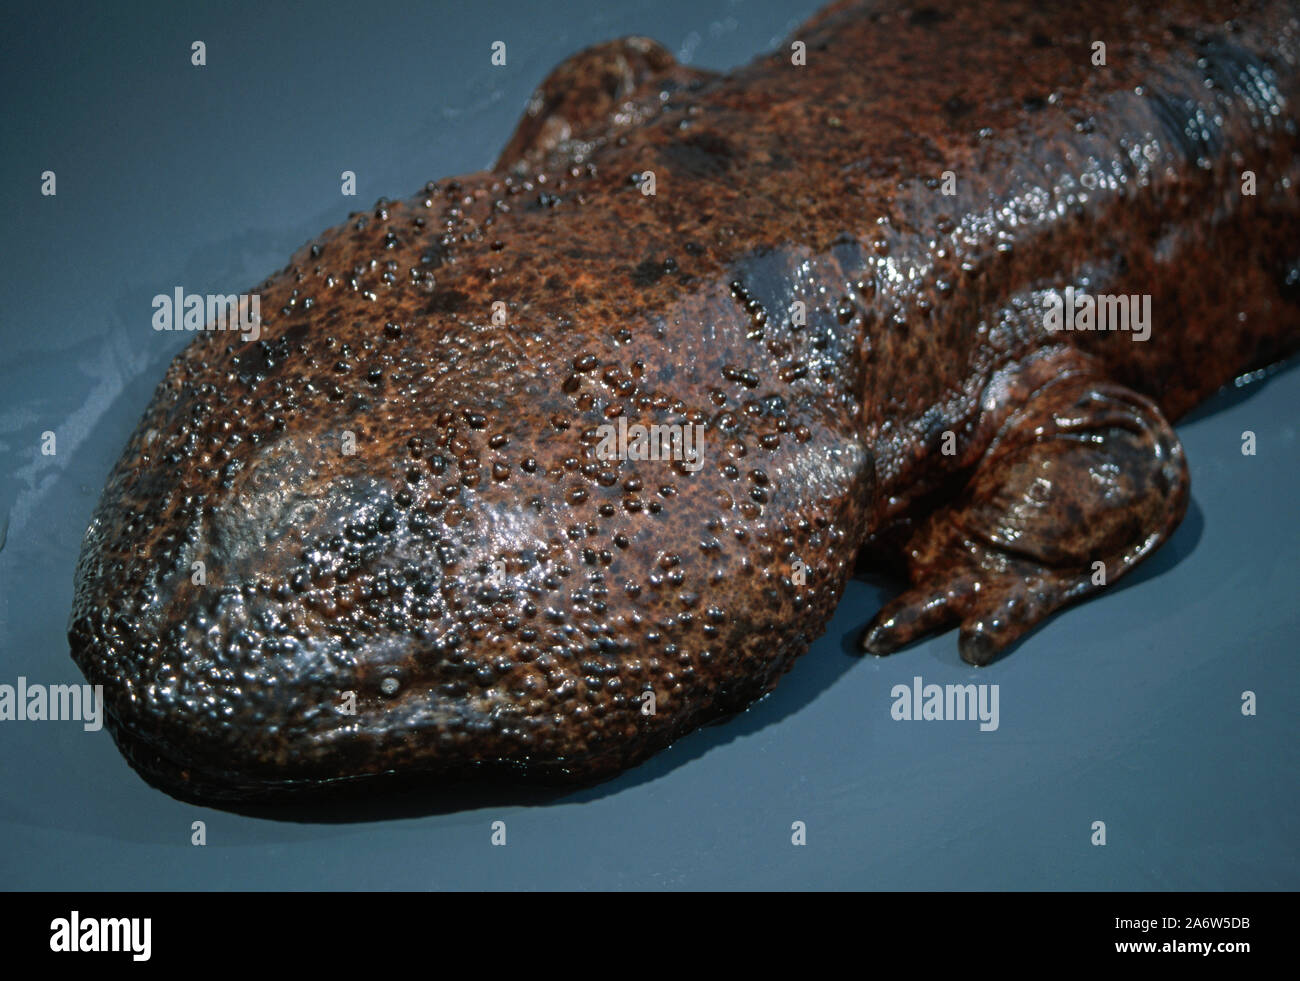 JAPANESE GIANT SALAMANDER Andrias japonicus head, showing minute eye, bottom left. Sensory nodes on skin. Cold water aquatic amphibian. Near threatene Stock Photo